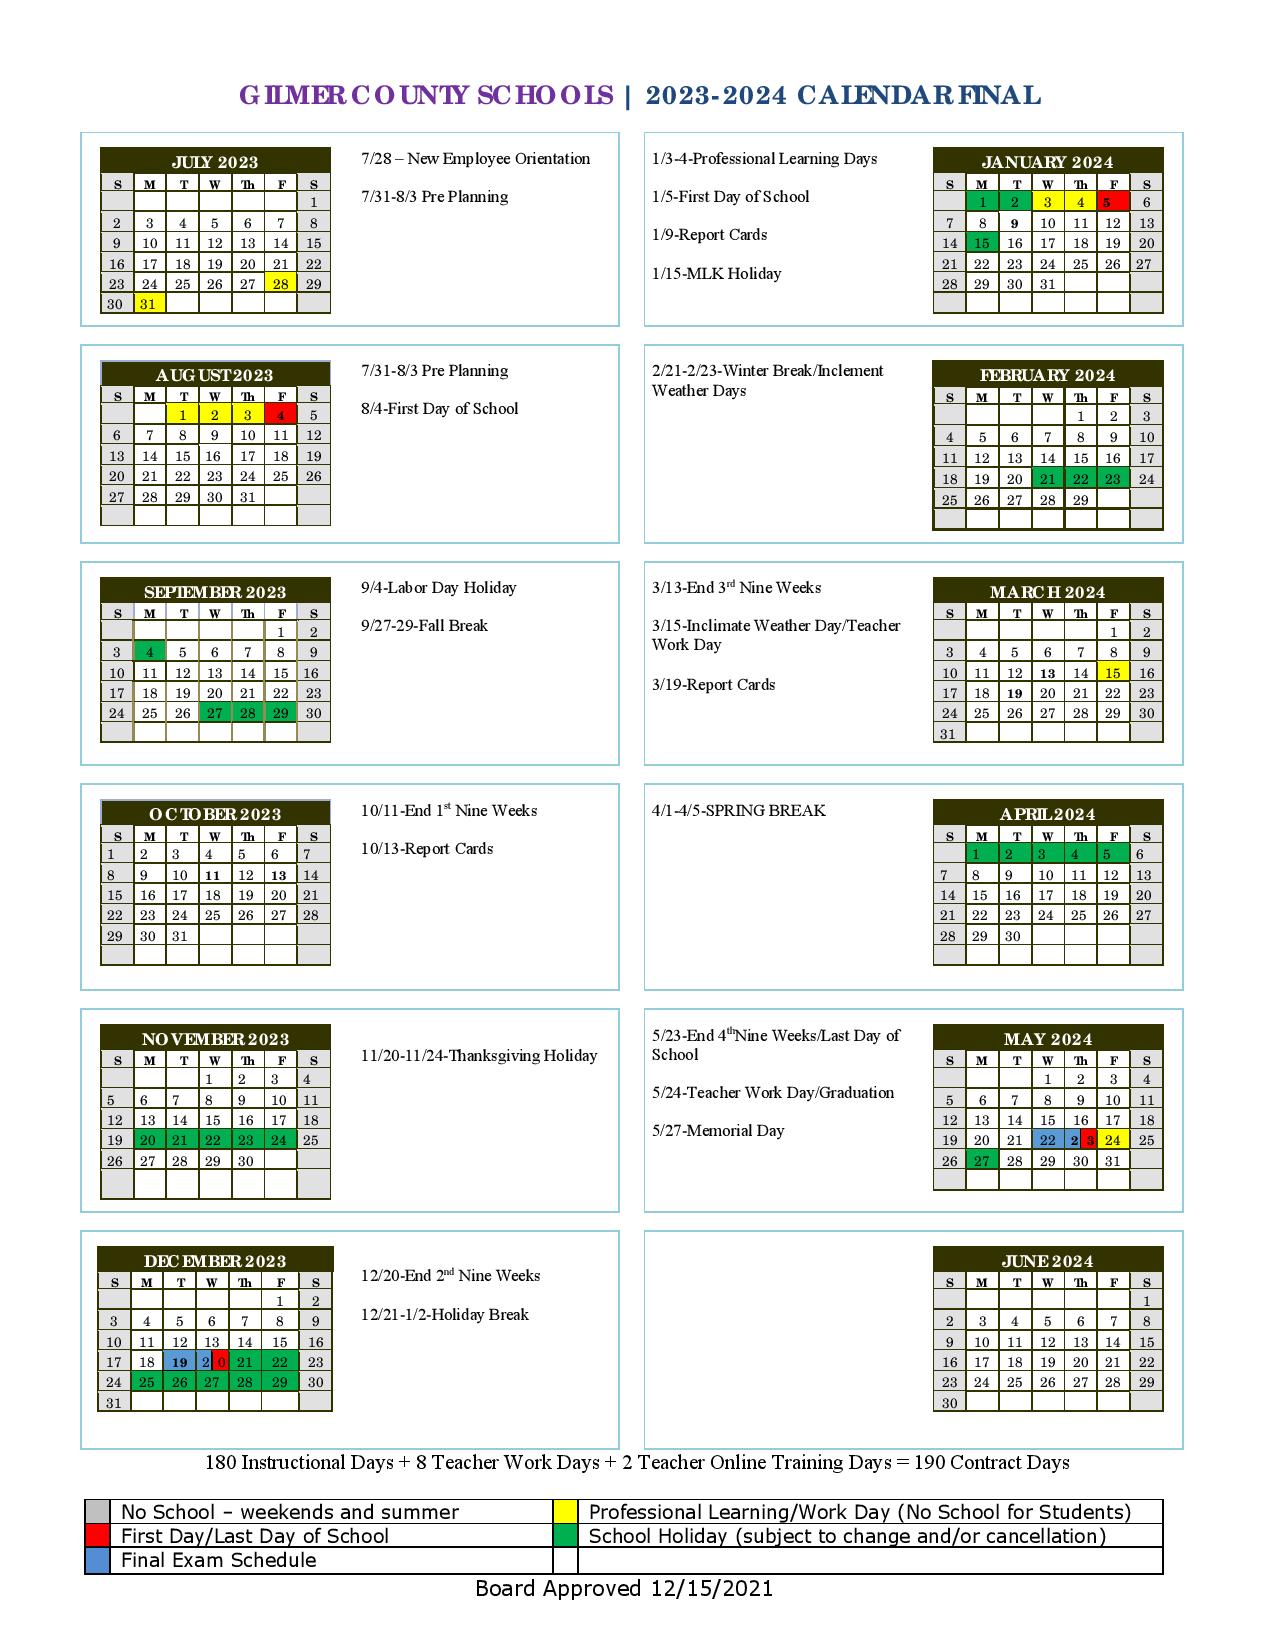 gilmer-county-charter-schools-calendar-2023-2024-in-pdf-school-calendar-info